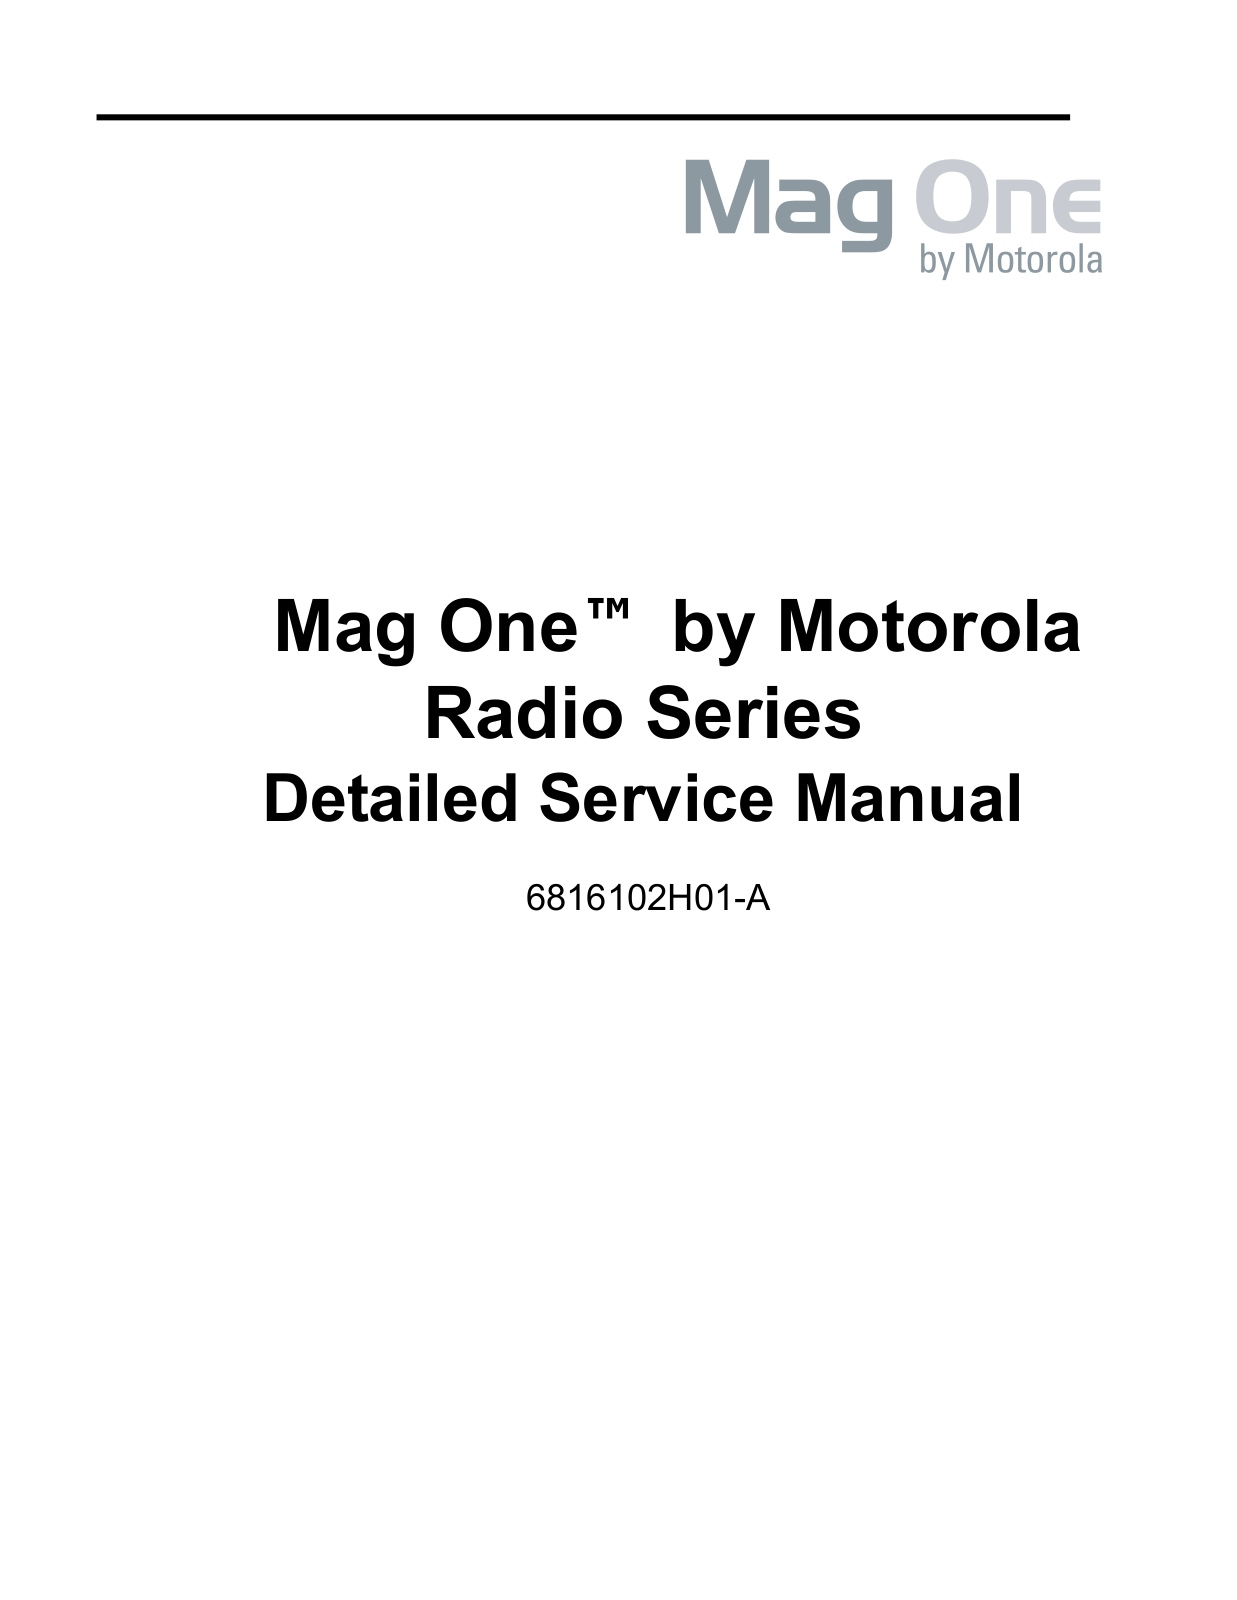 Motorola Detailed   Mag One, MagOneDETALLADO Service Manual